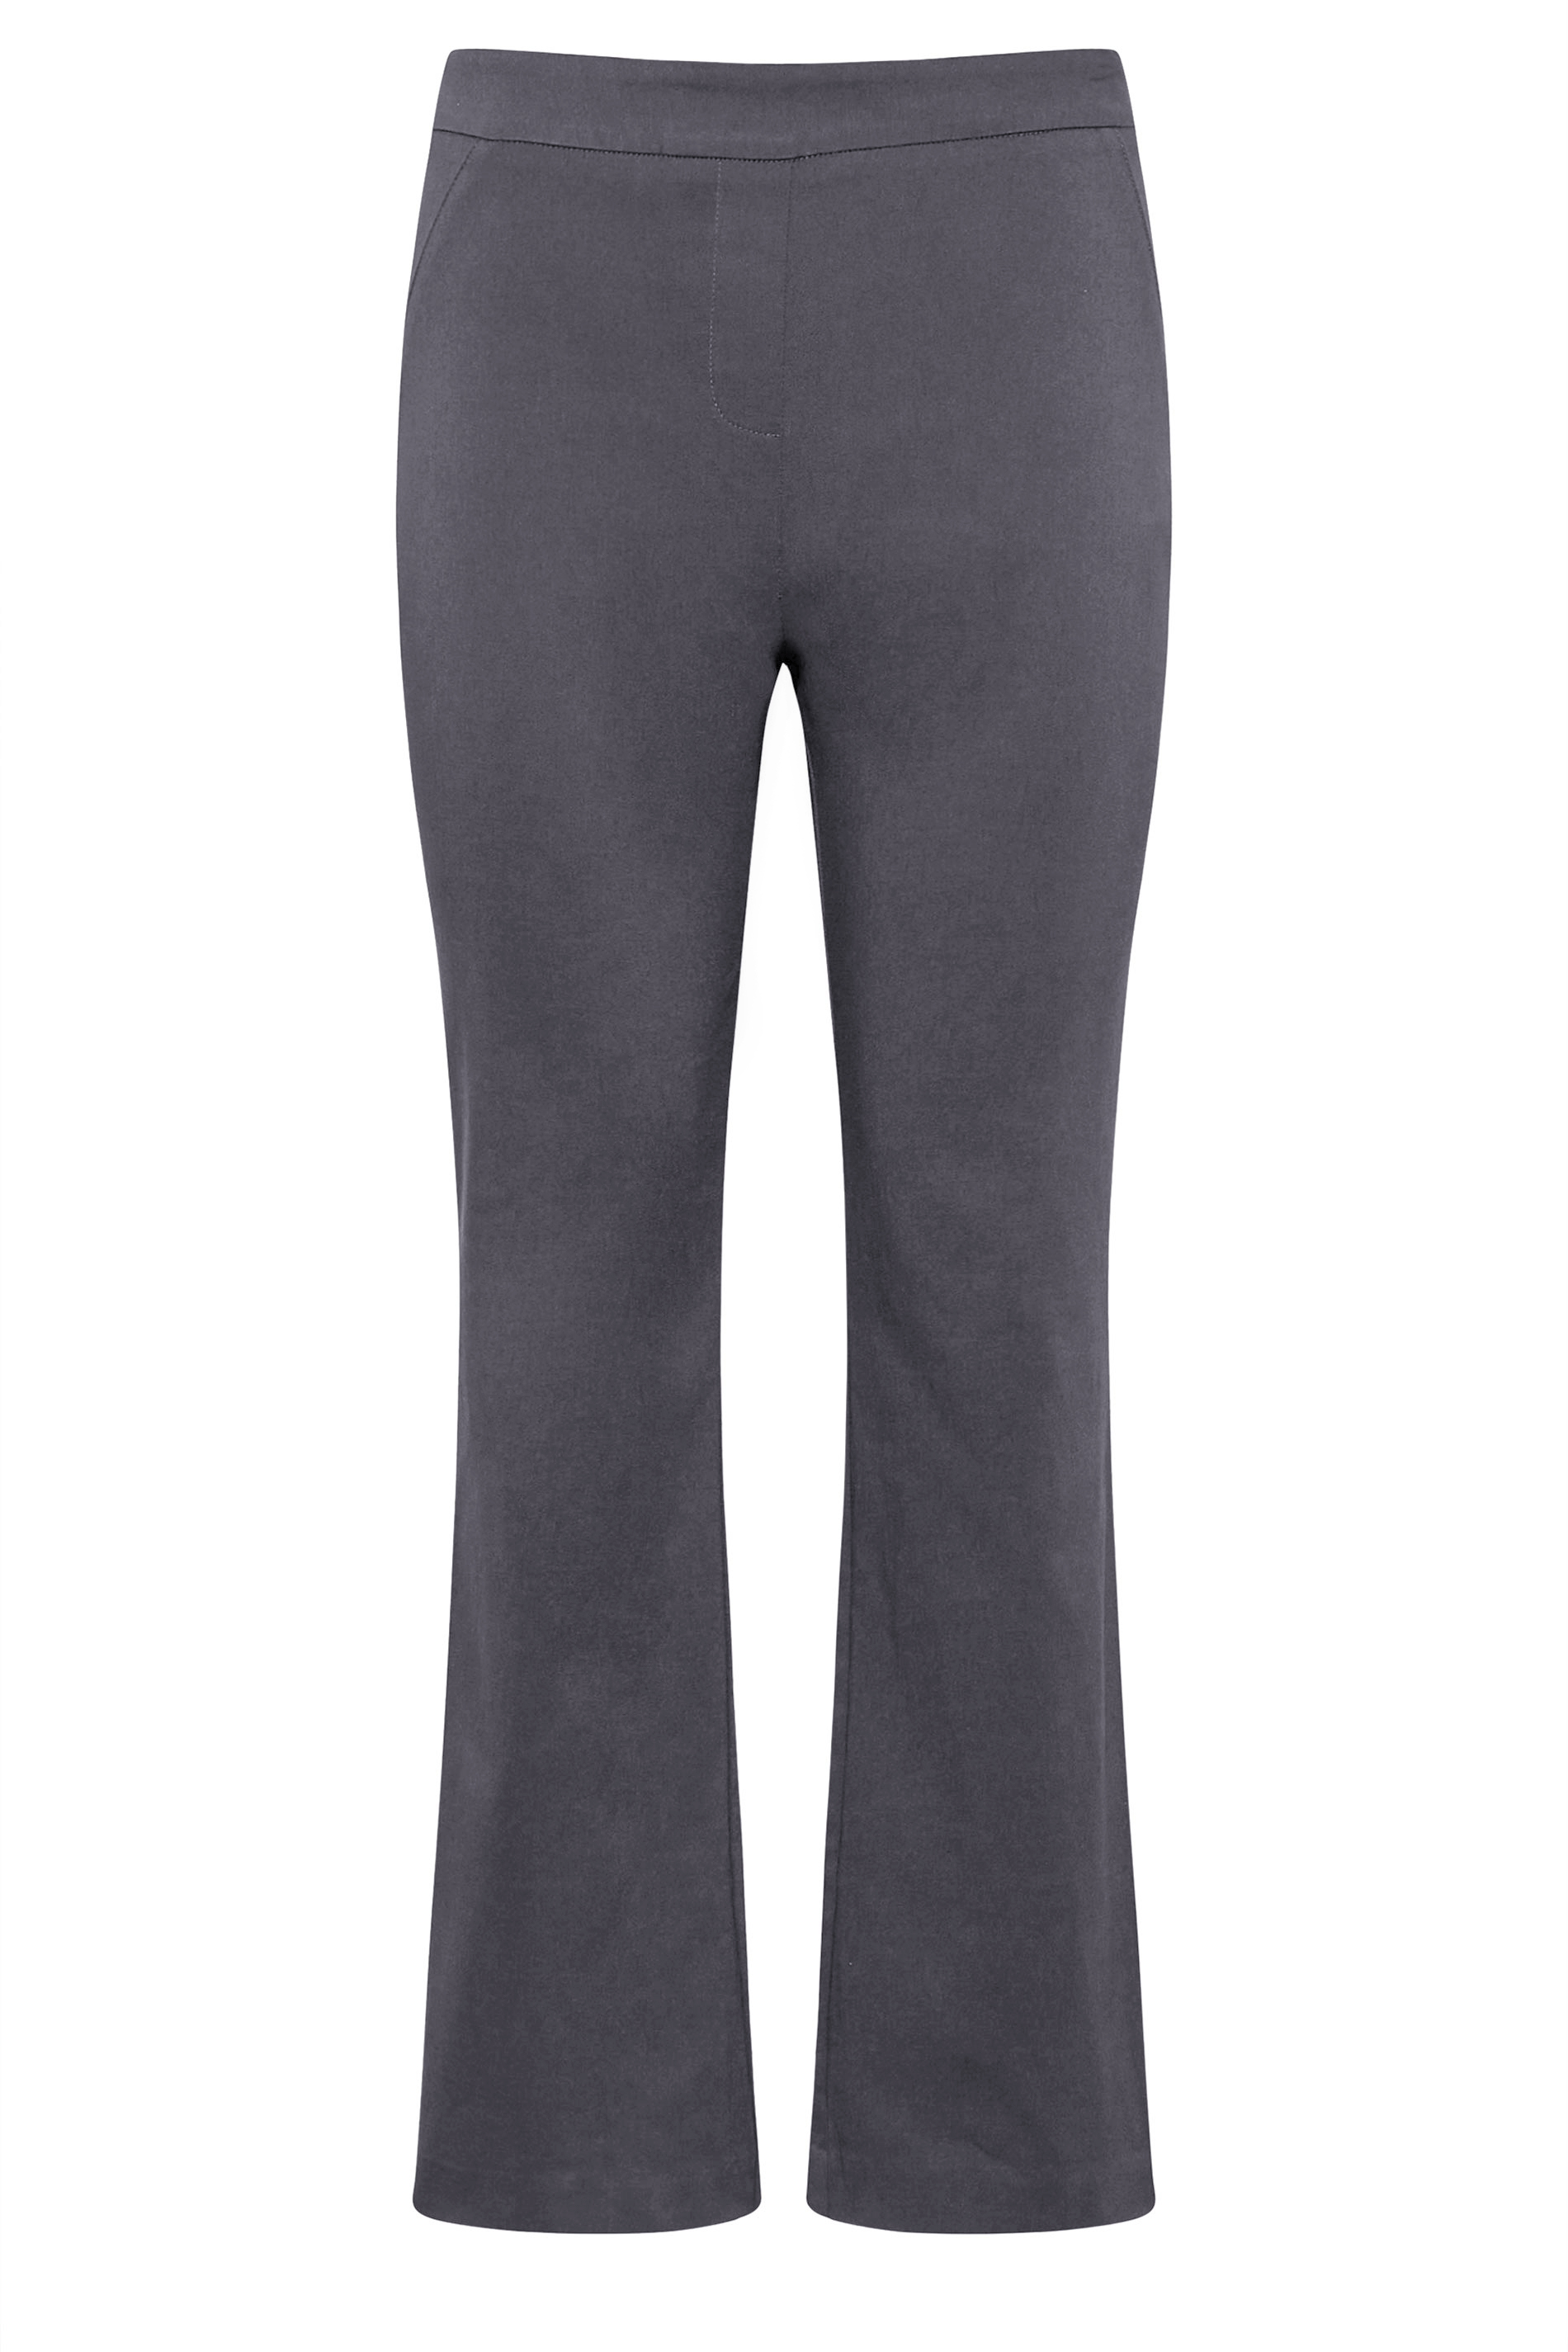 Petite Grey Stretch Bengaline Bootcut Trousers | PixieGirl